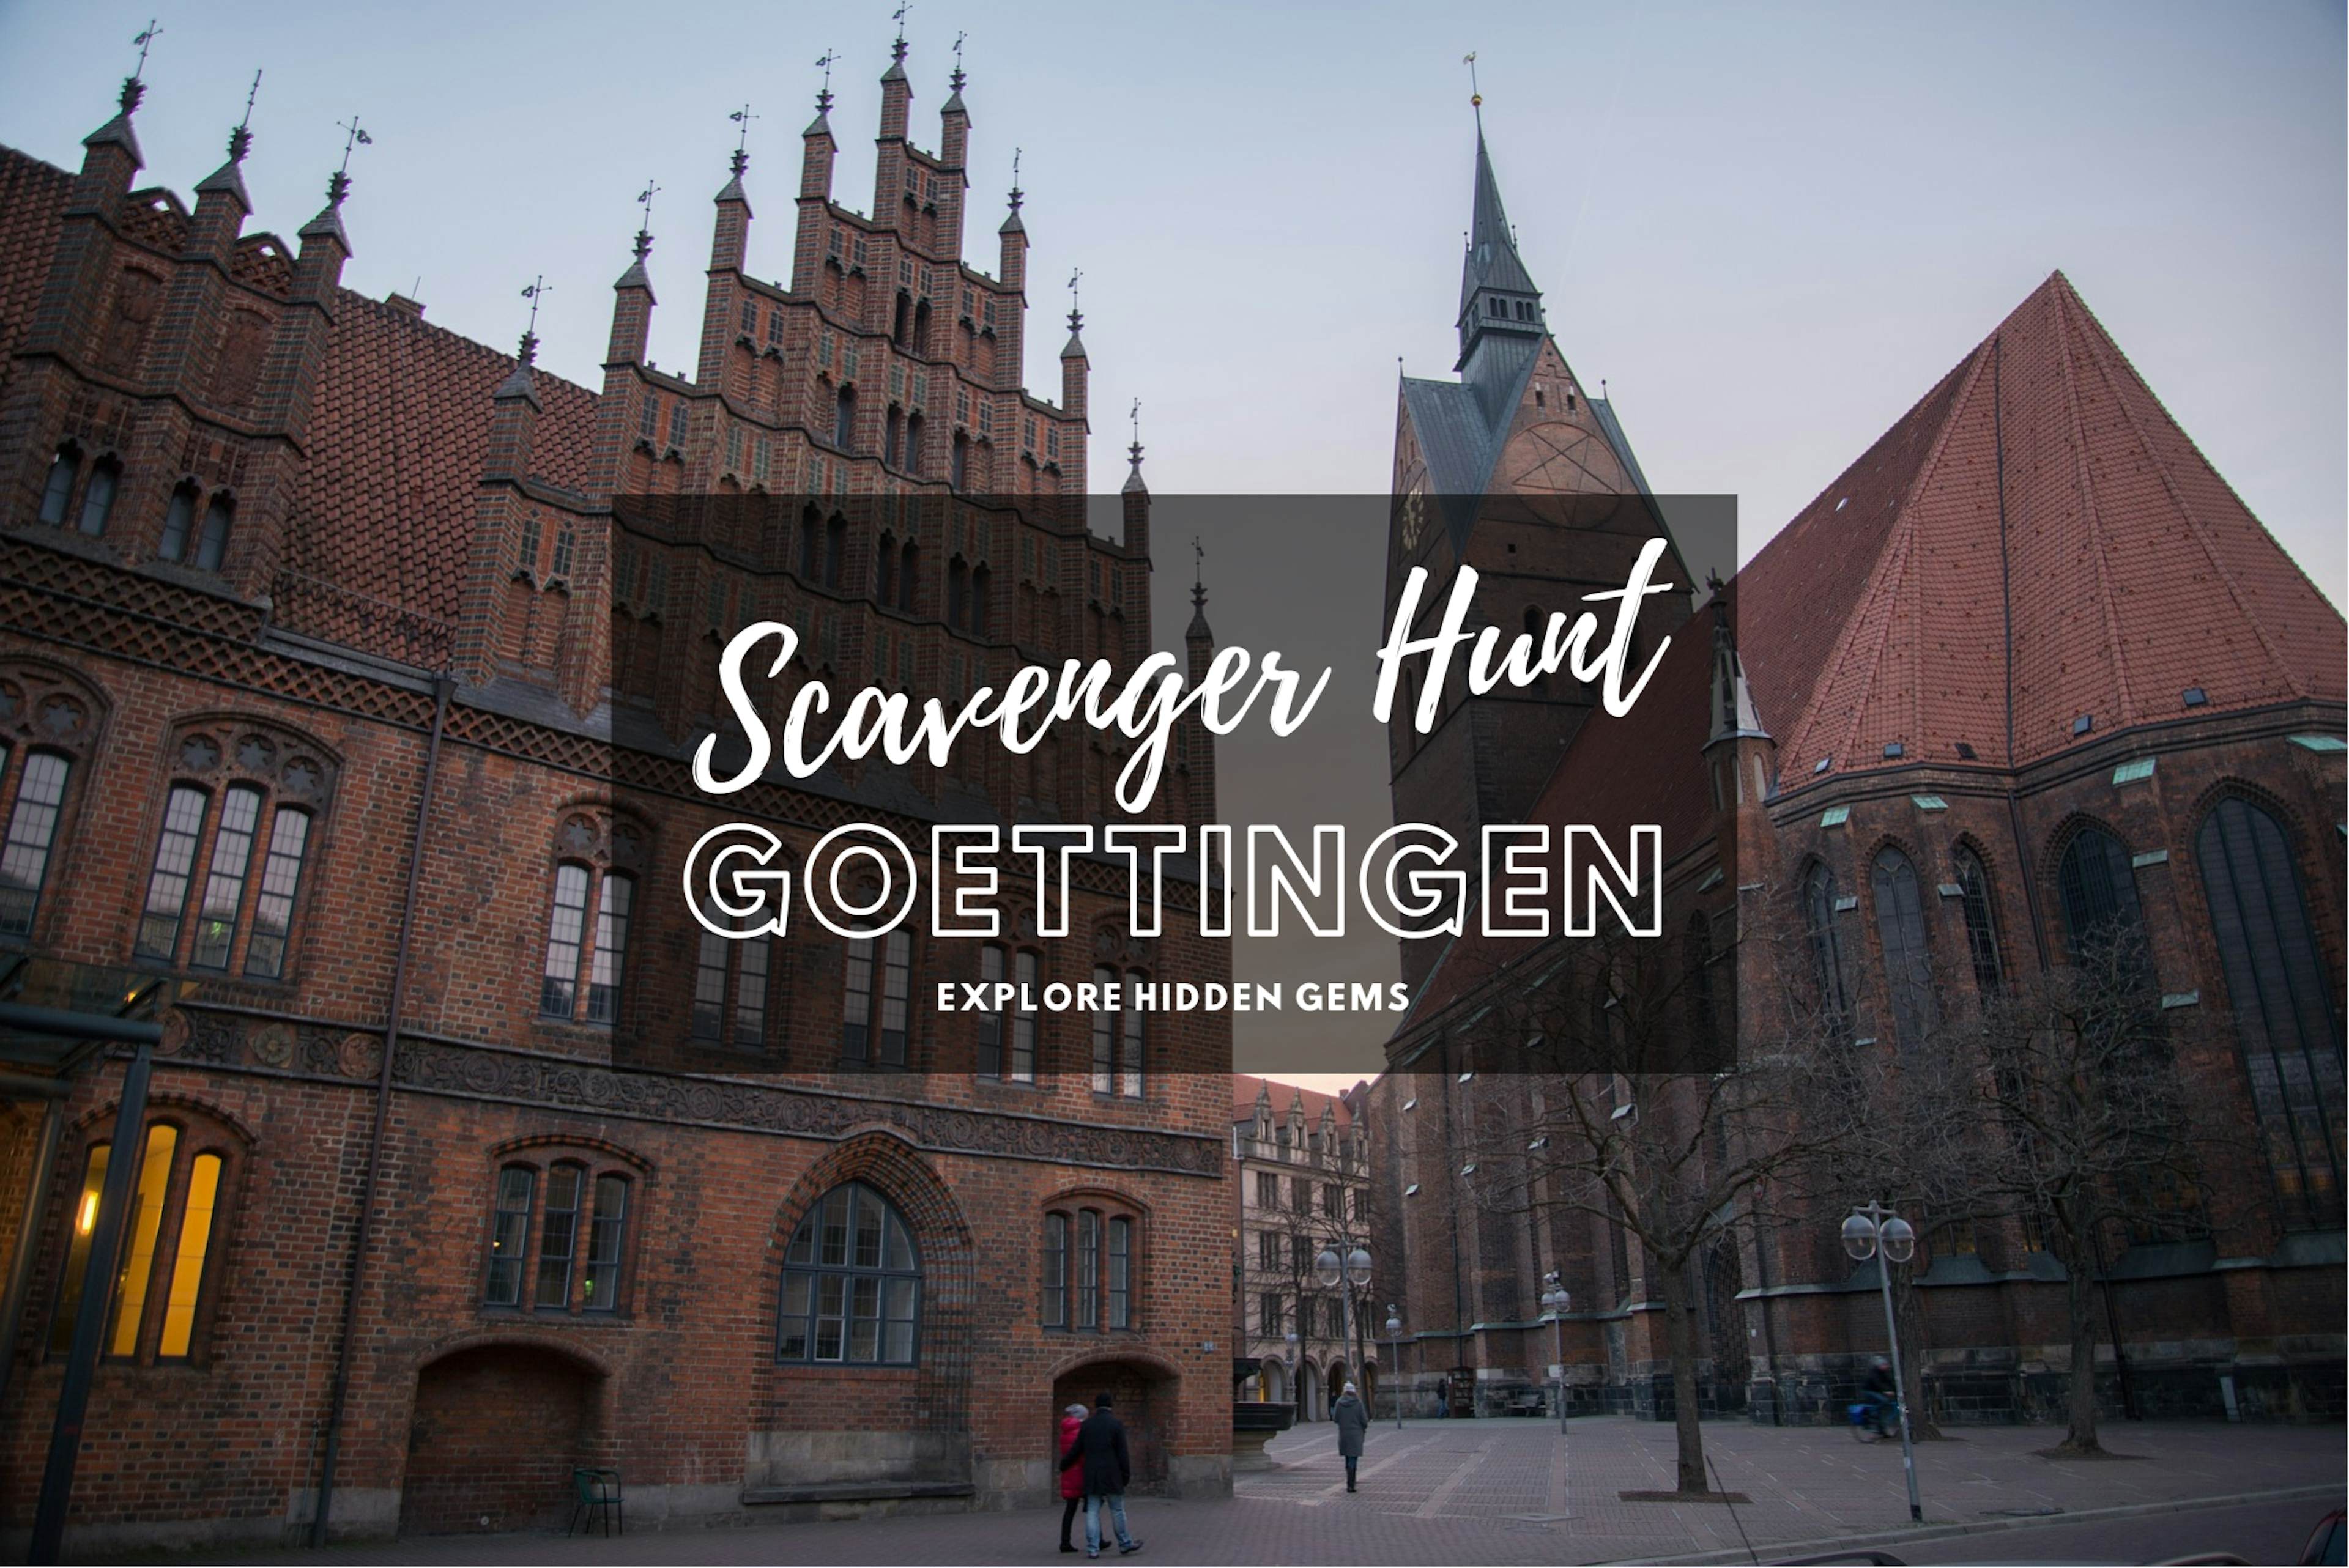 Scavenger Hunt Göttingen - Explore hidden gems